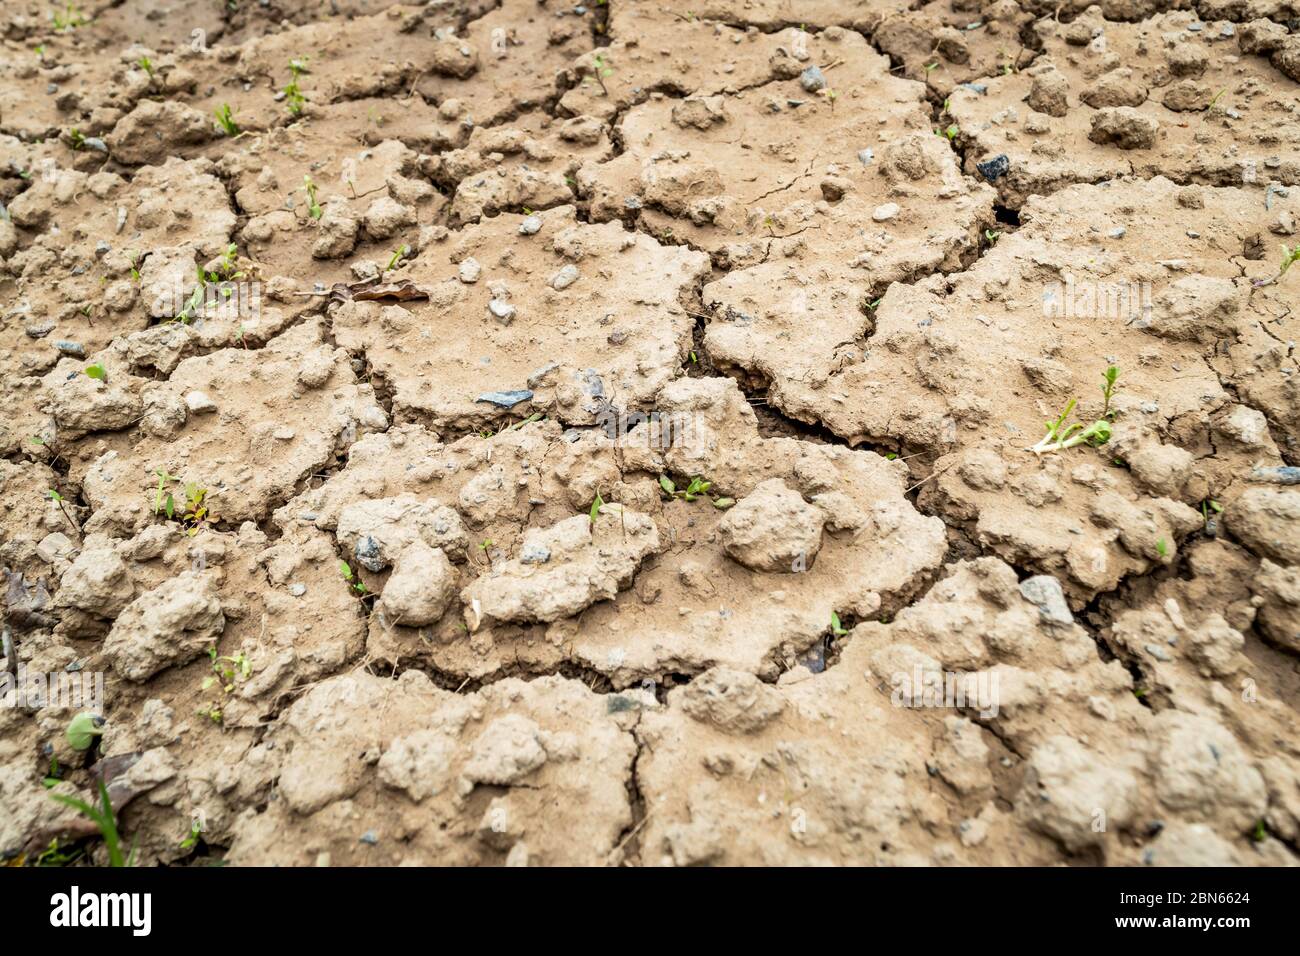 Cracks in dry soil due to lack of rainfall. Barren soil with cracks Stock Photo